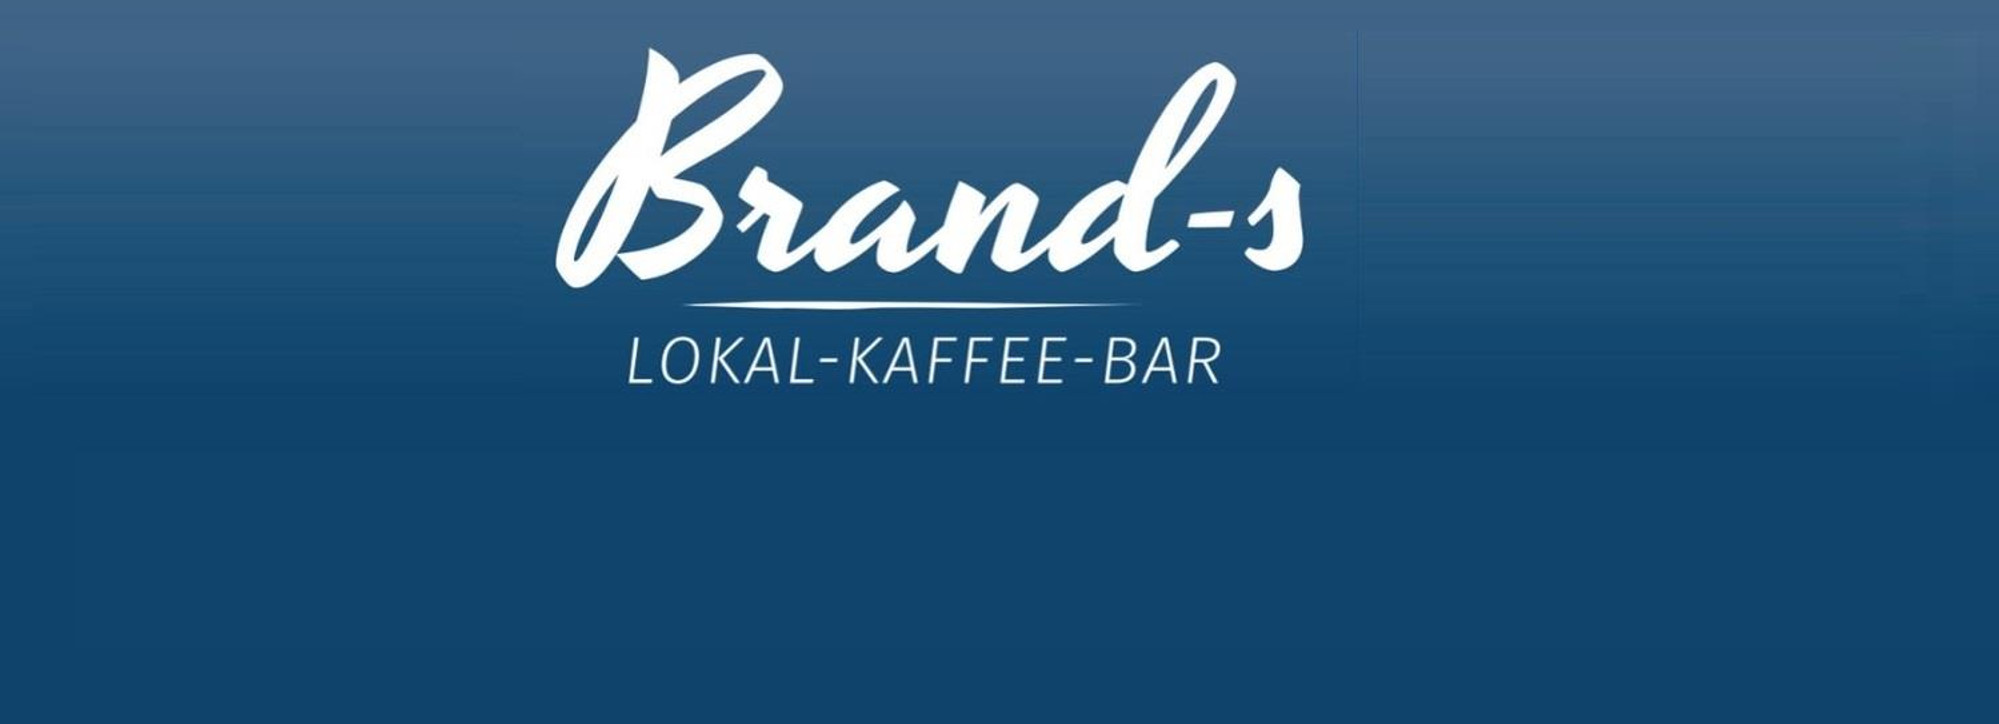 Lokal - Kaffee - Bar | Brand-s